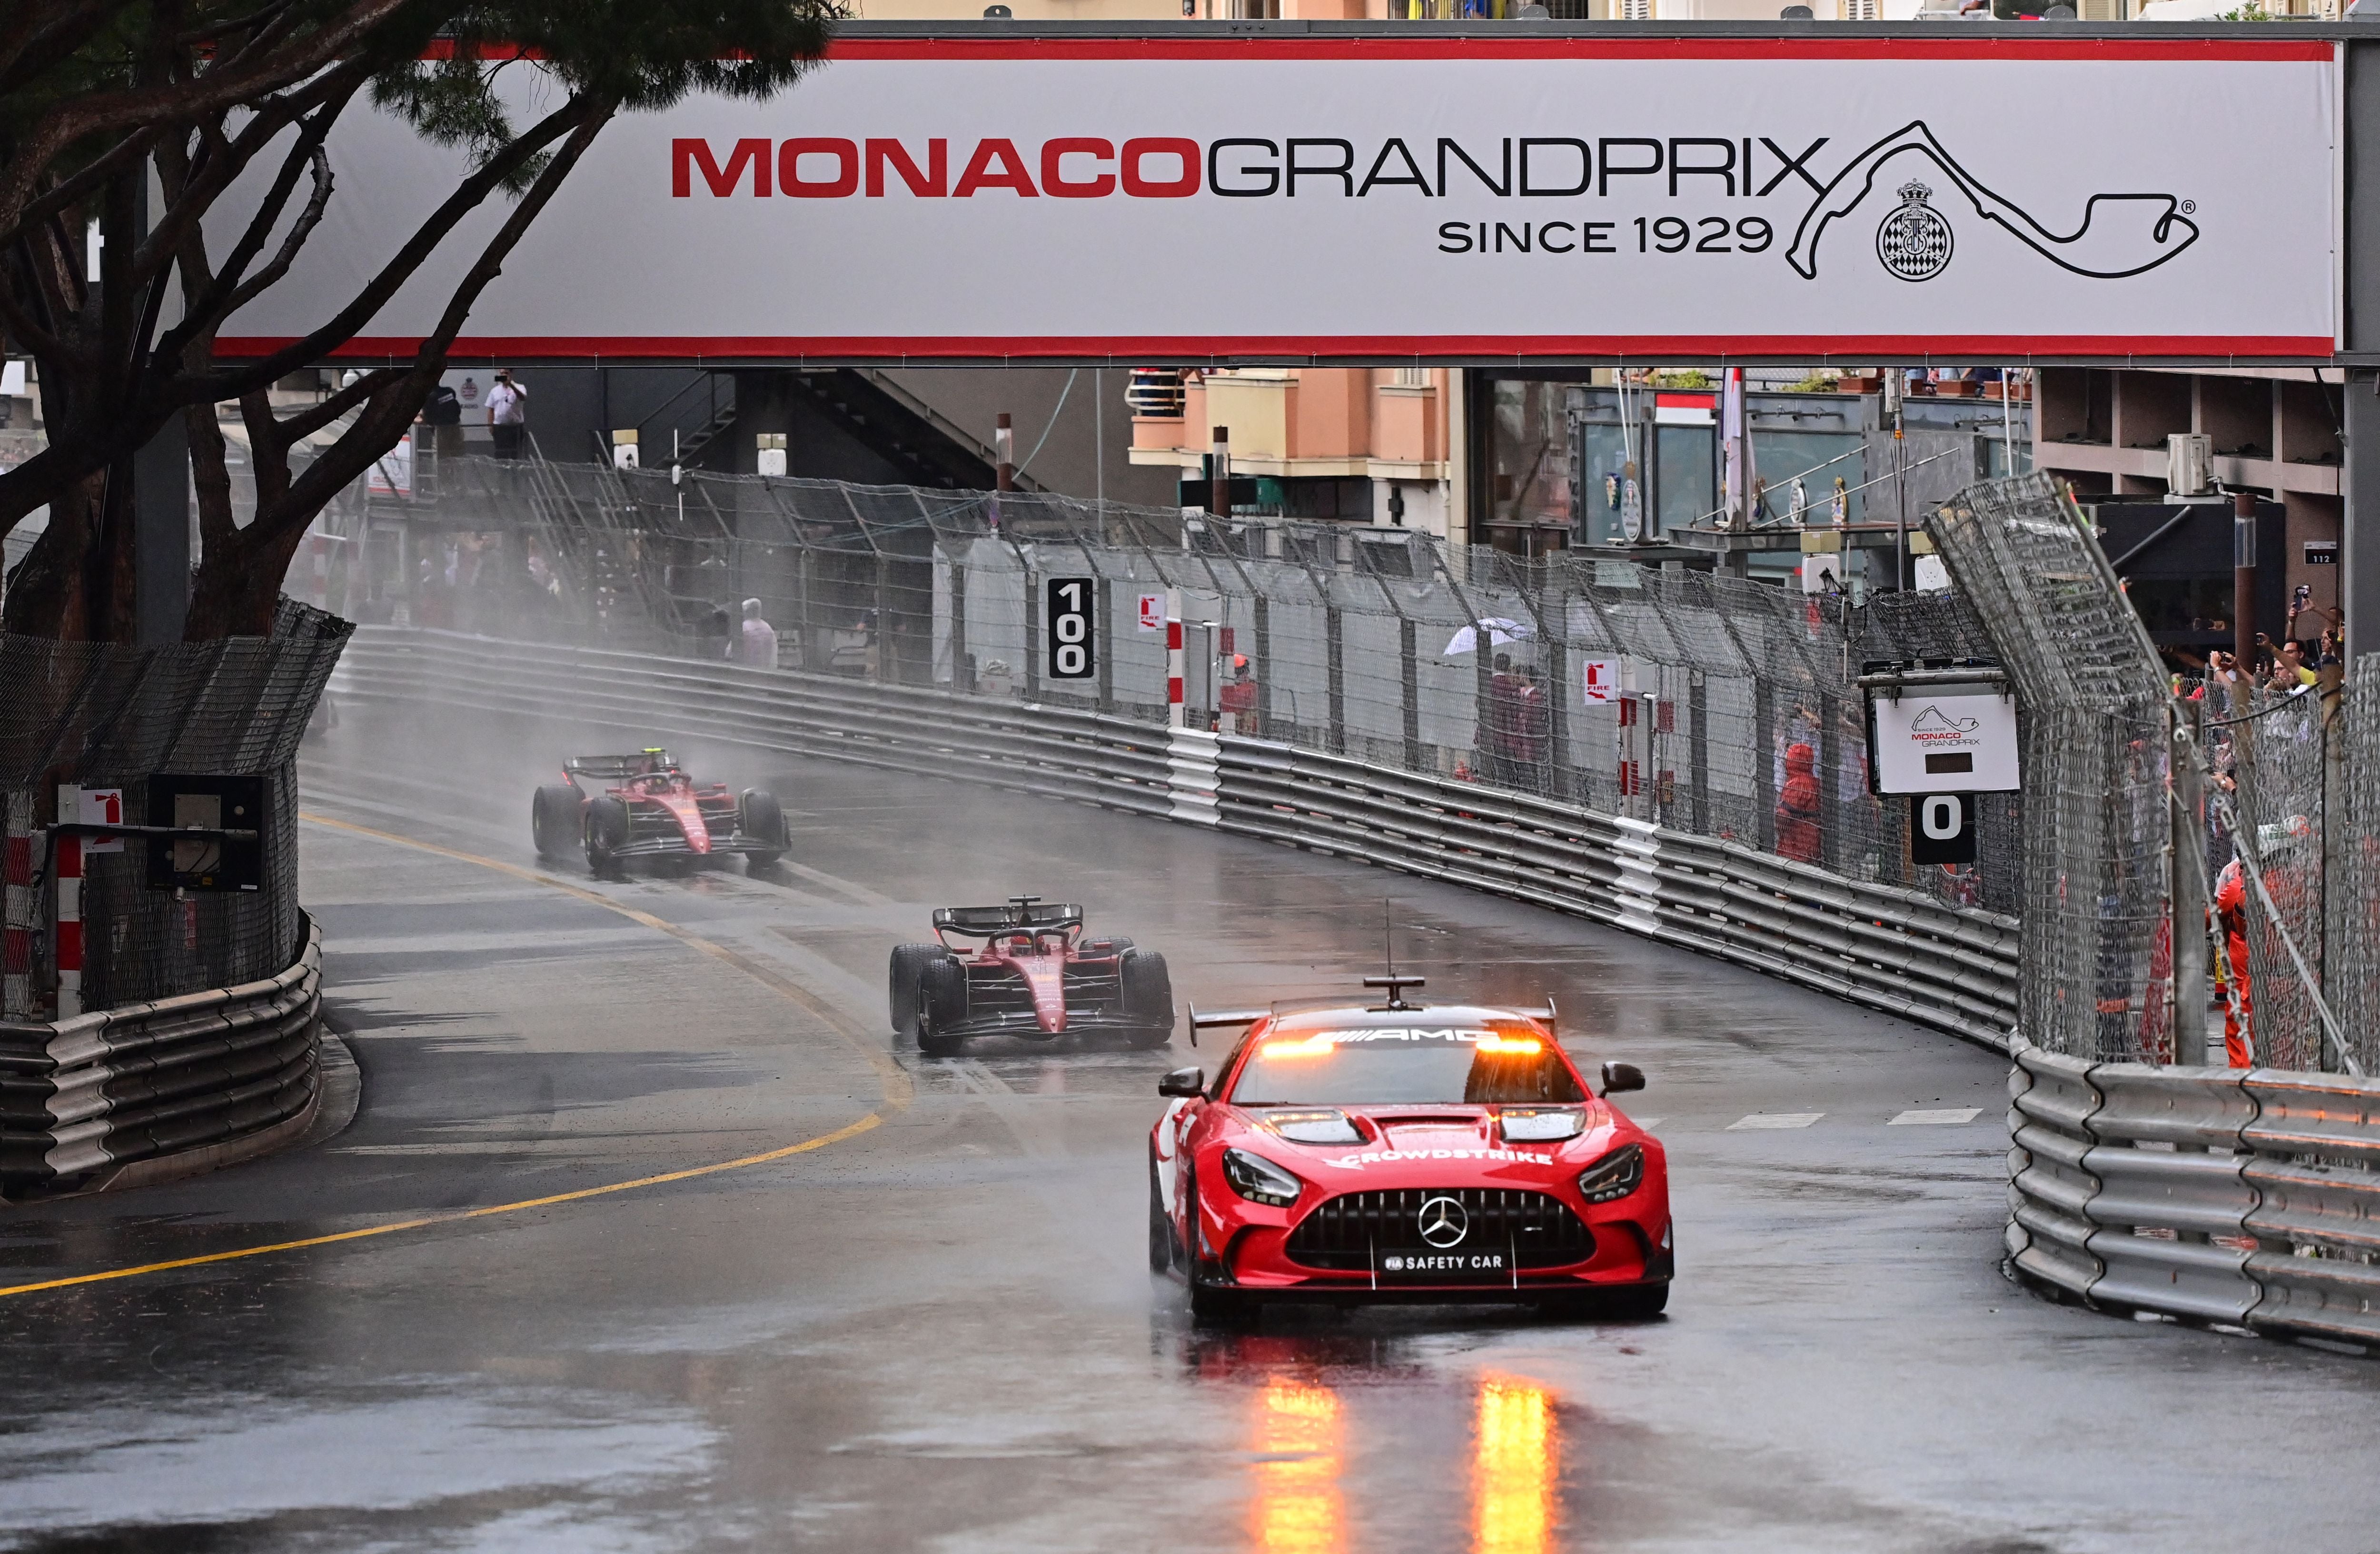 The Monaco Grand Prix eventually got under way behind a safety car